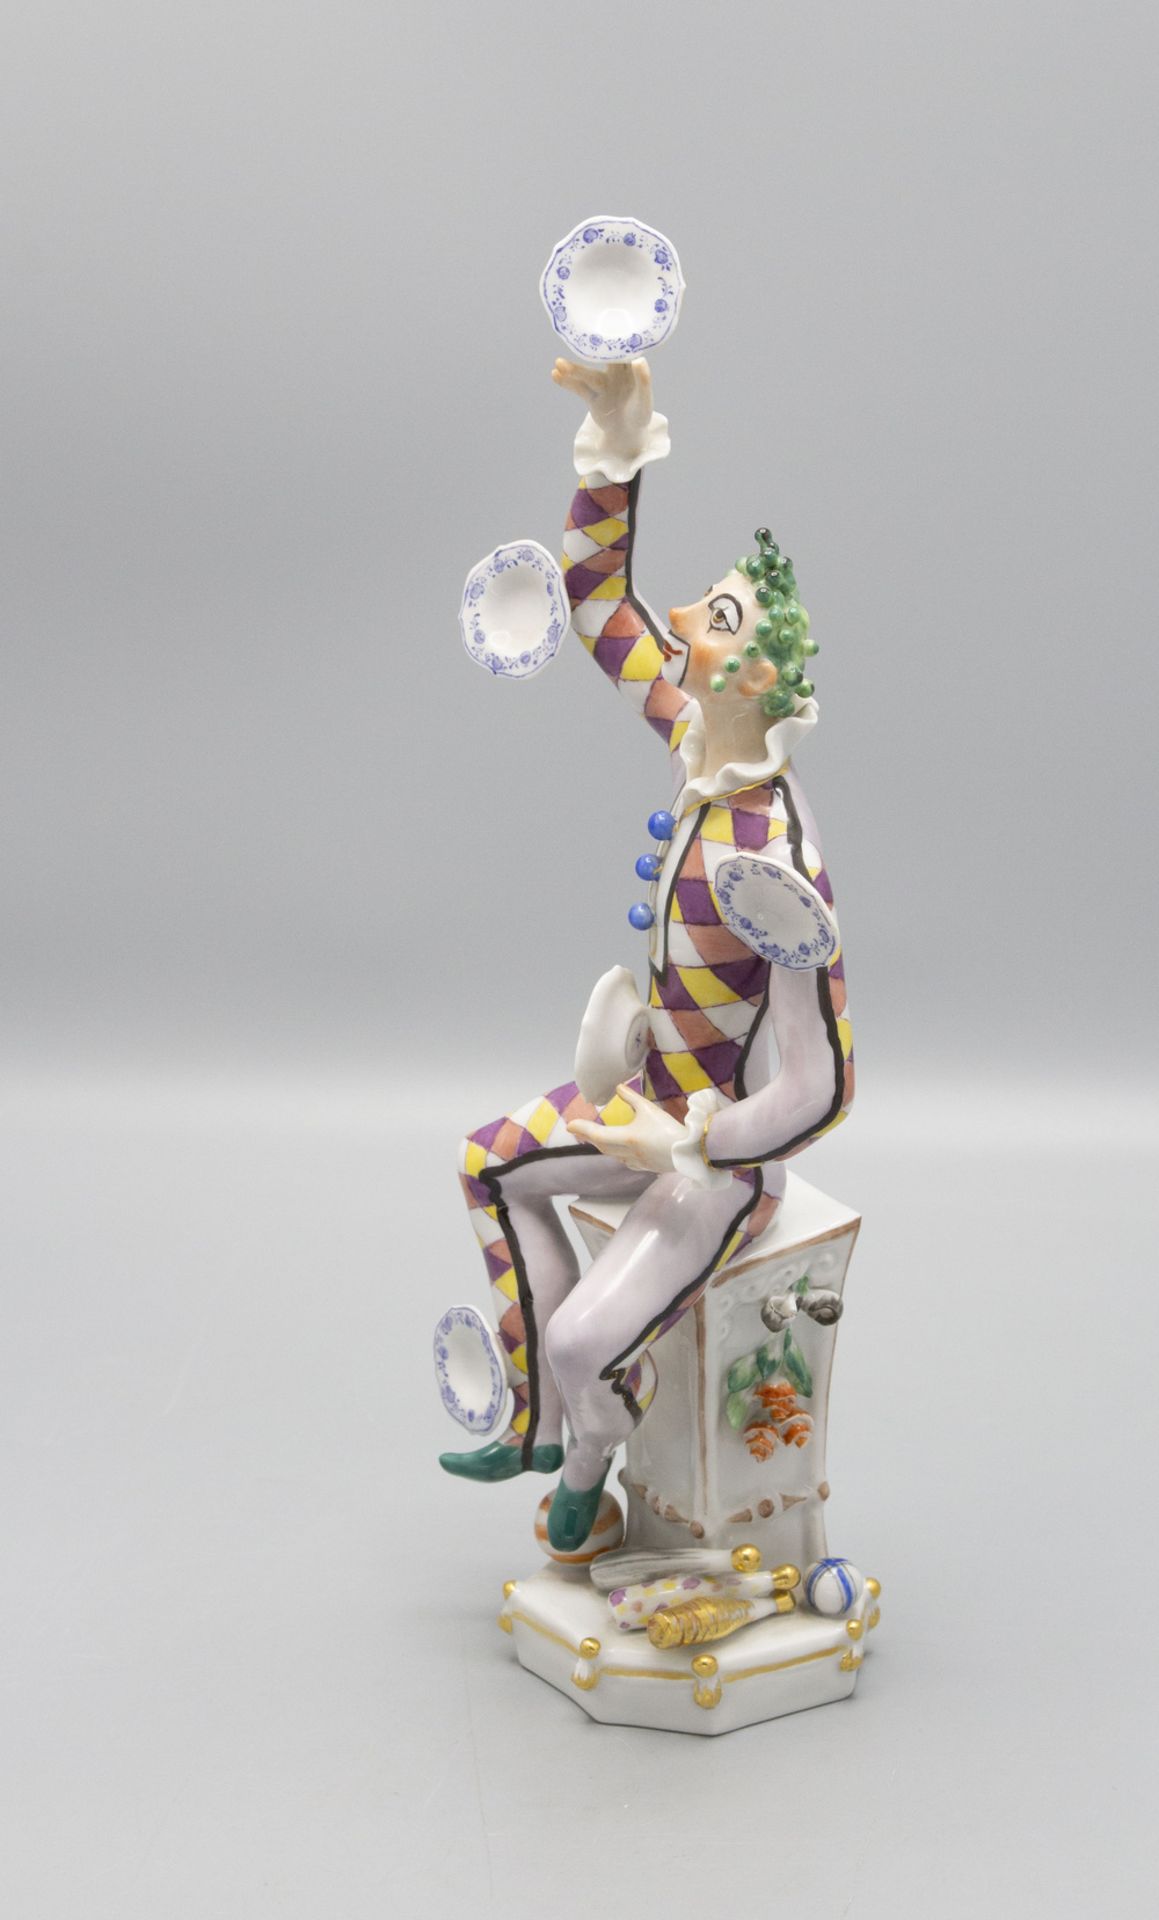 Porzellanfigur 'Der Jongleur' / A porcelain figurine 'The Juggler', Meissen, 1976 - Image 2 of 5